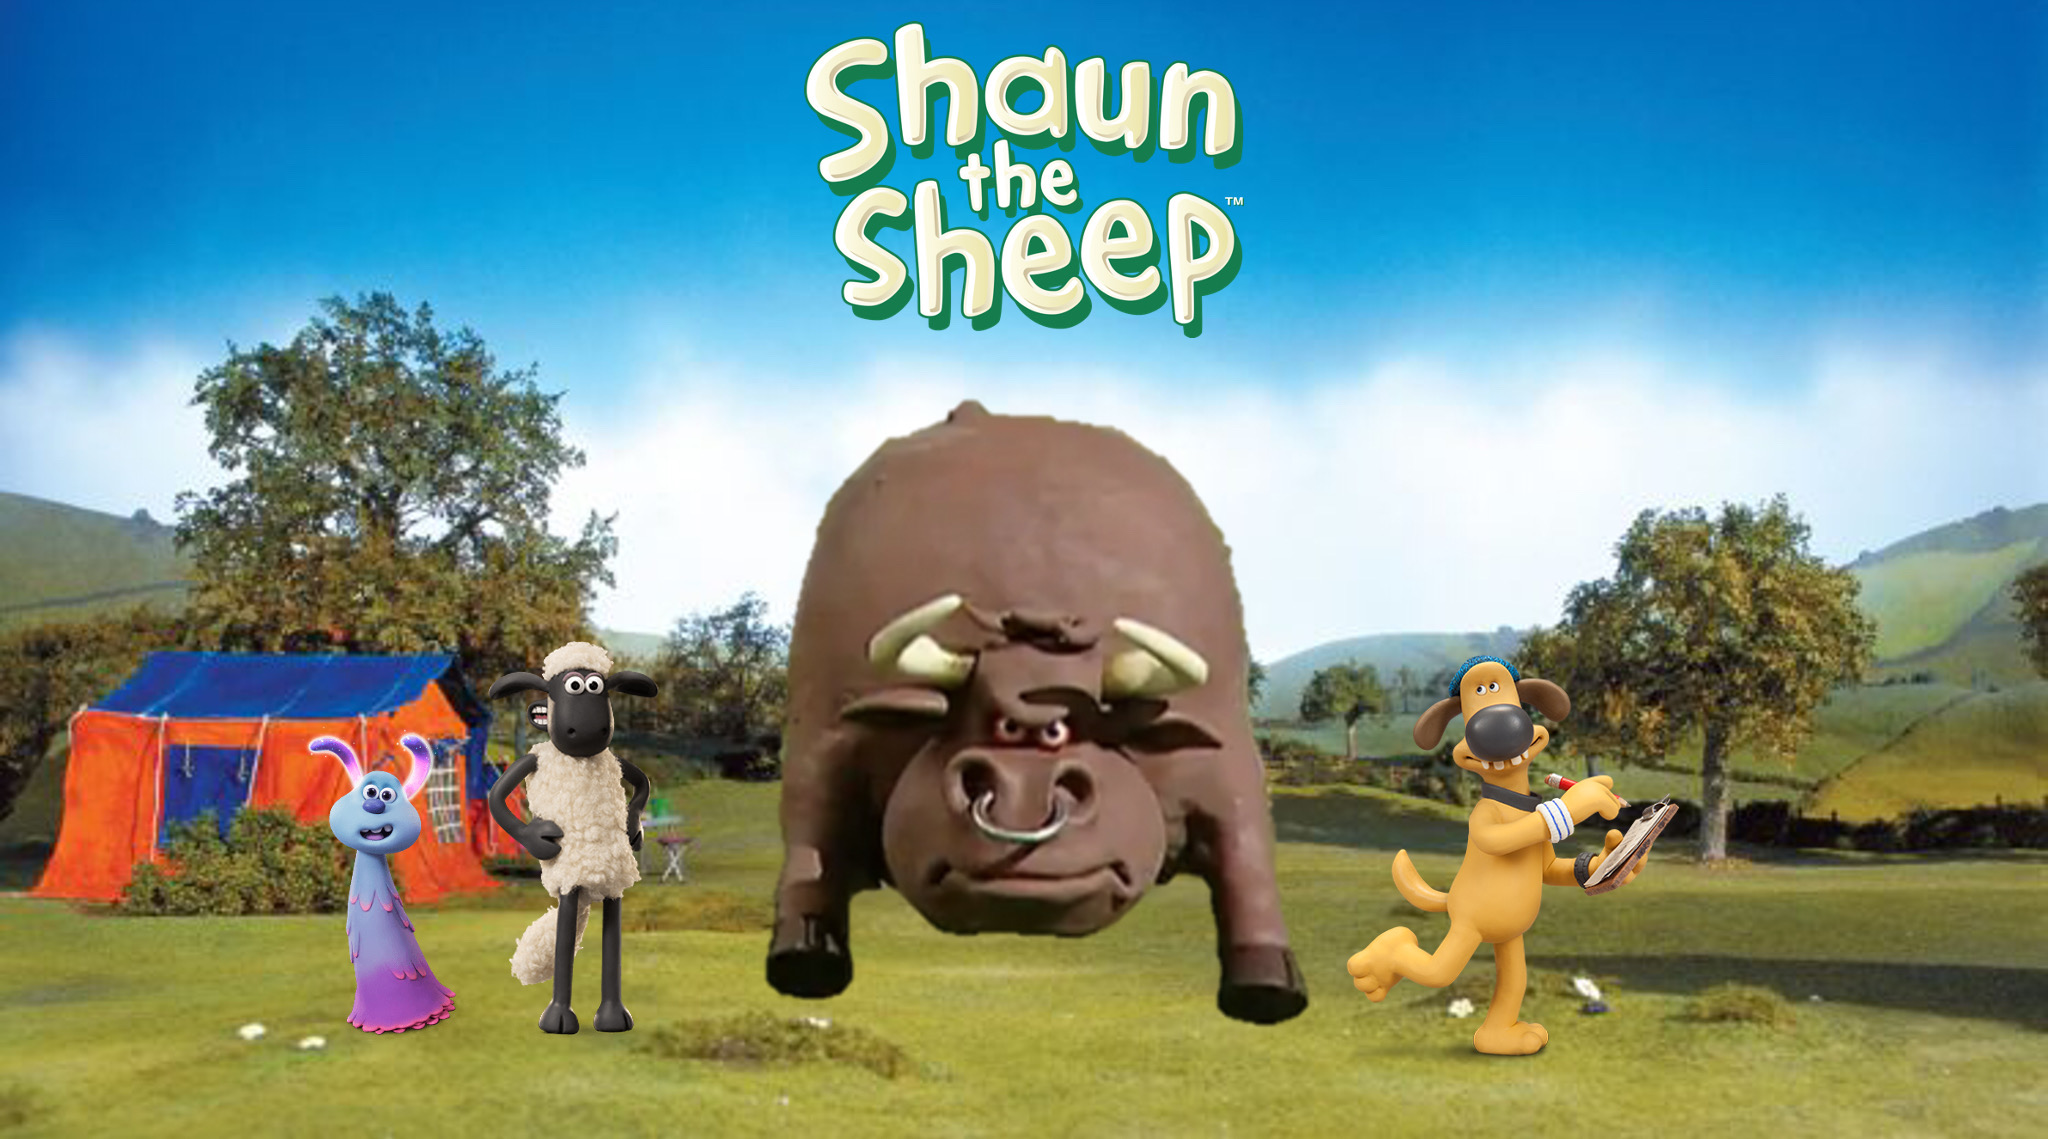 Shaun The Sheep wallpaper by DarkMoonAnimation on DeviantArt